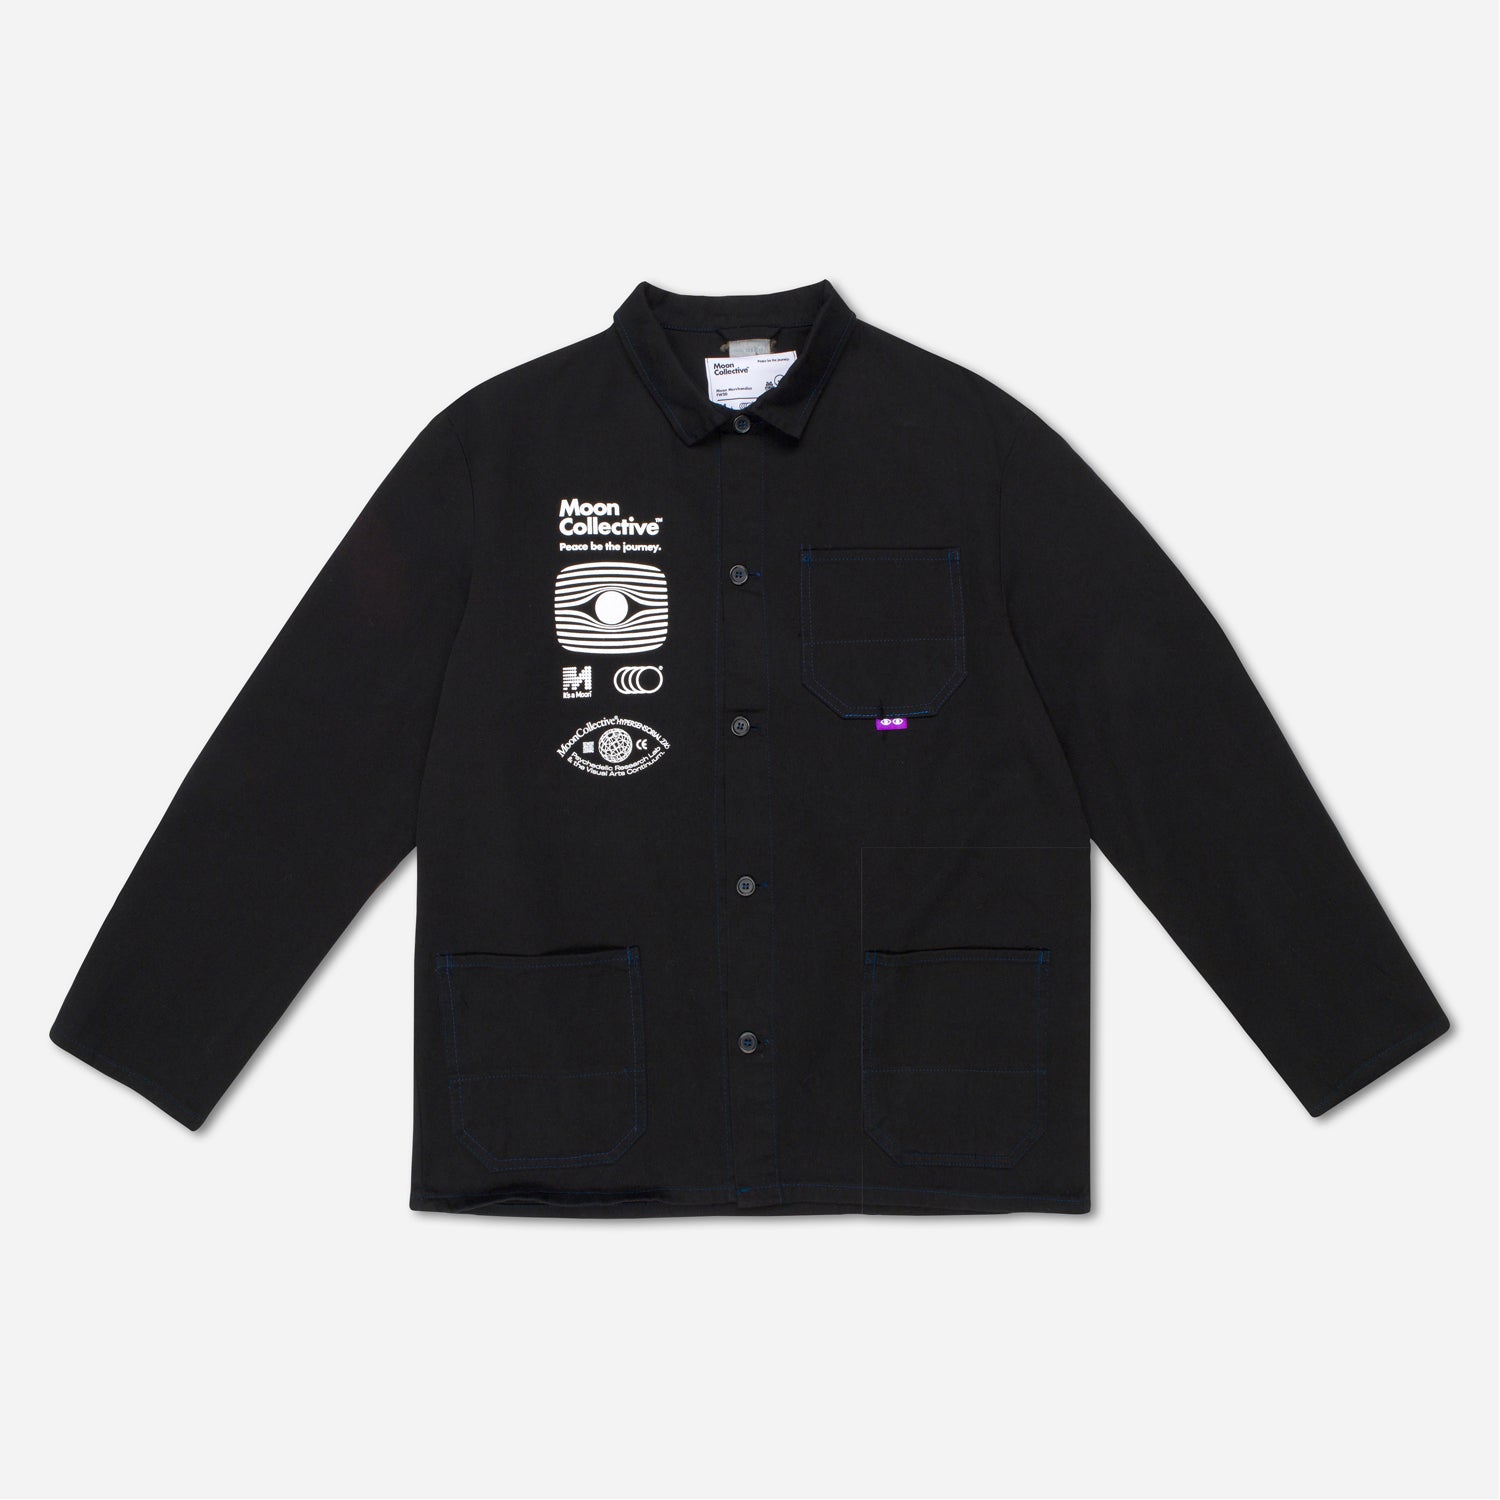 Black Chore Jacket 7B - S